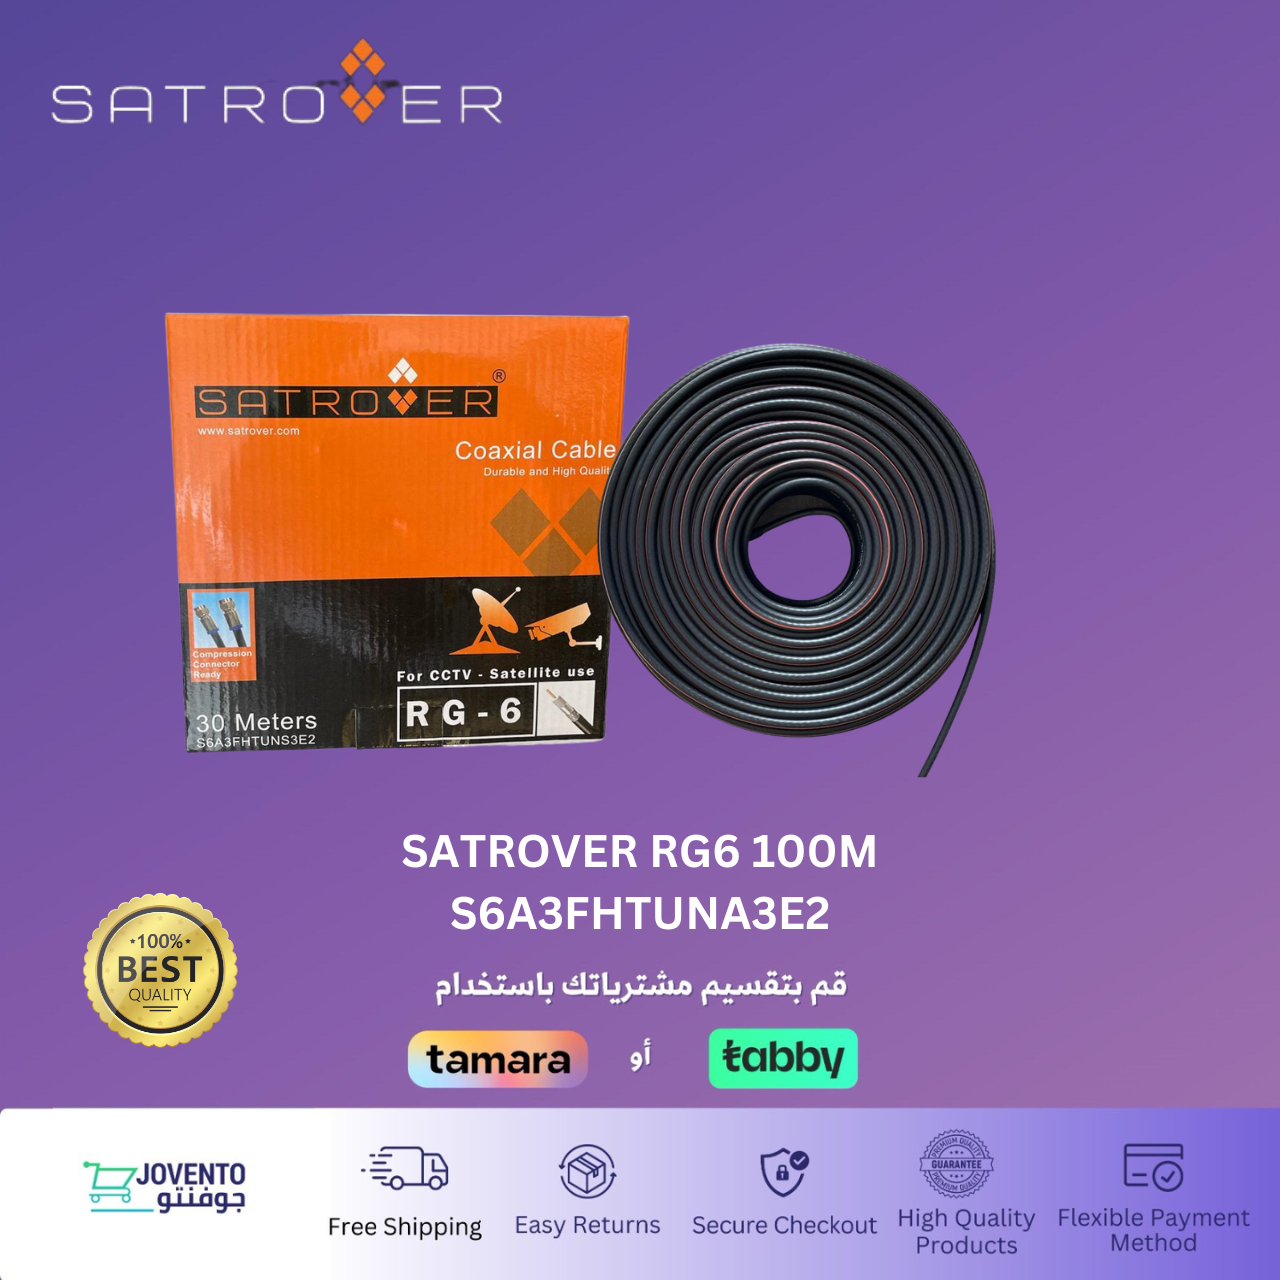 SATROVER 100M RG6 Coaxial Cable (S6A3FHTUNA3E2)